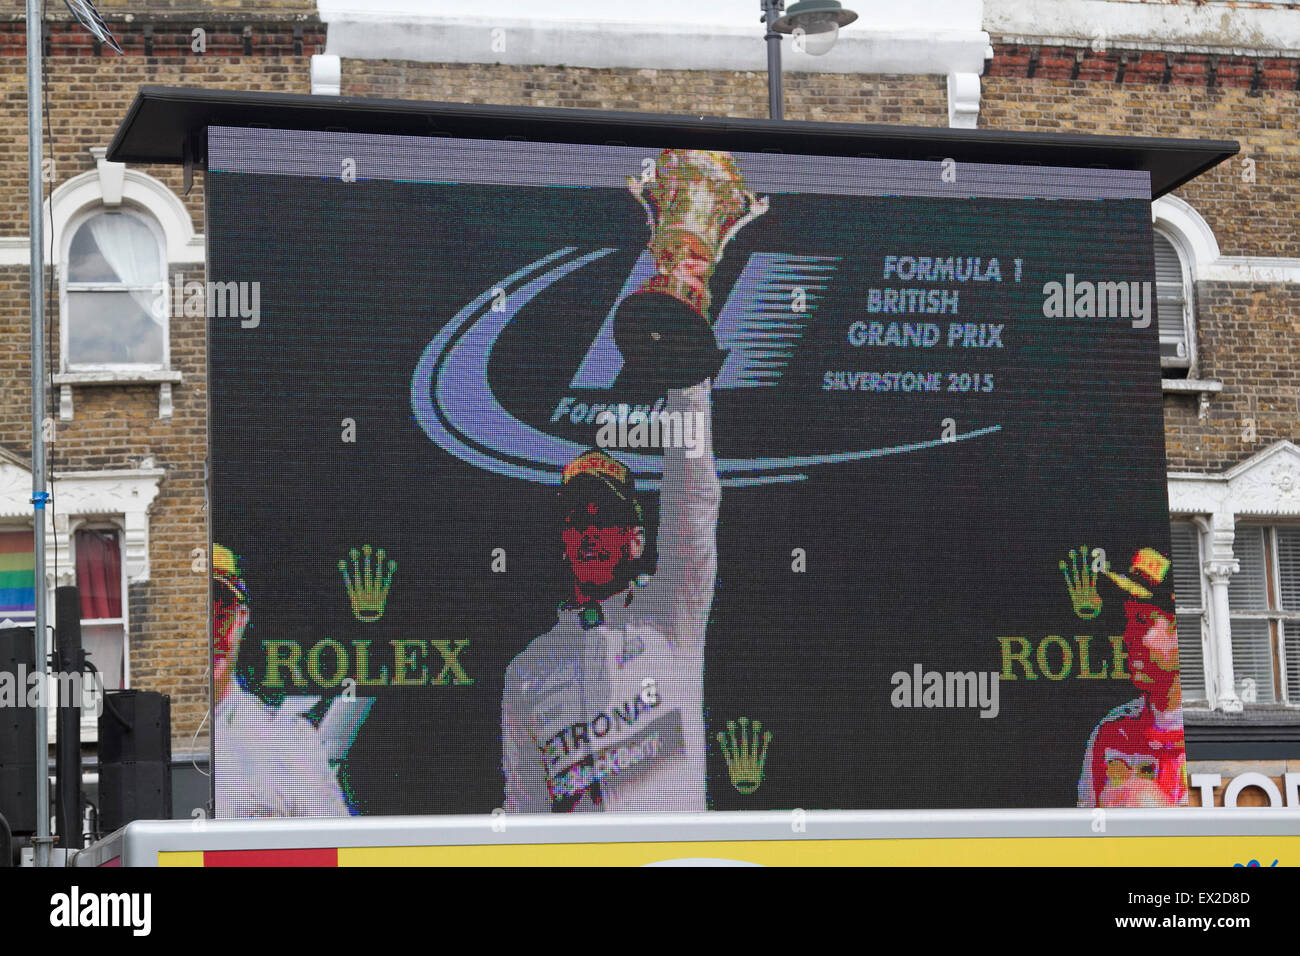 Wimbledon, London, UK. 5th July, 2015. Spectators watch Lewis Hamilton win Formula1 British Grand Prix at at Silverstone on a Big Screen in Wimbledon town centre Credit:  amer ghazzal/Alamy Live News Stock Photo